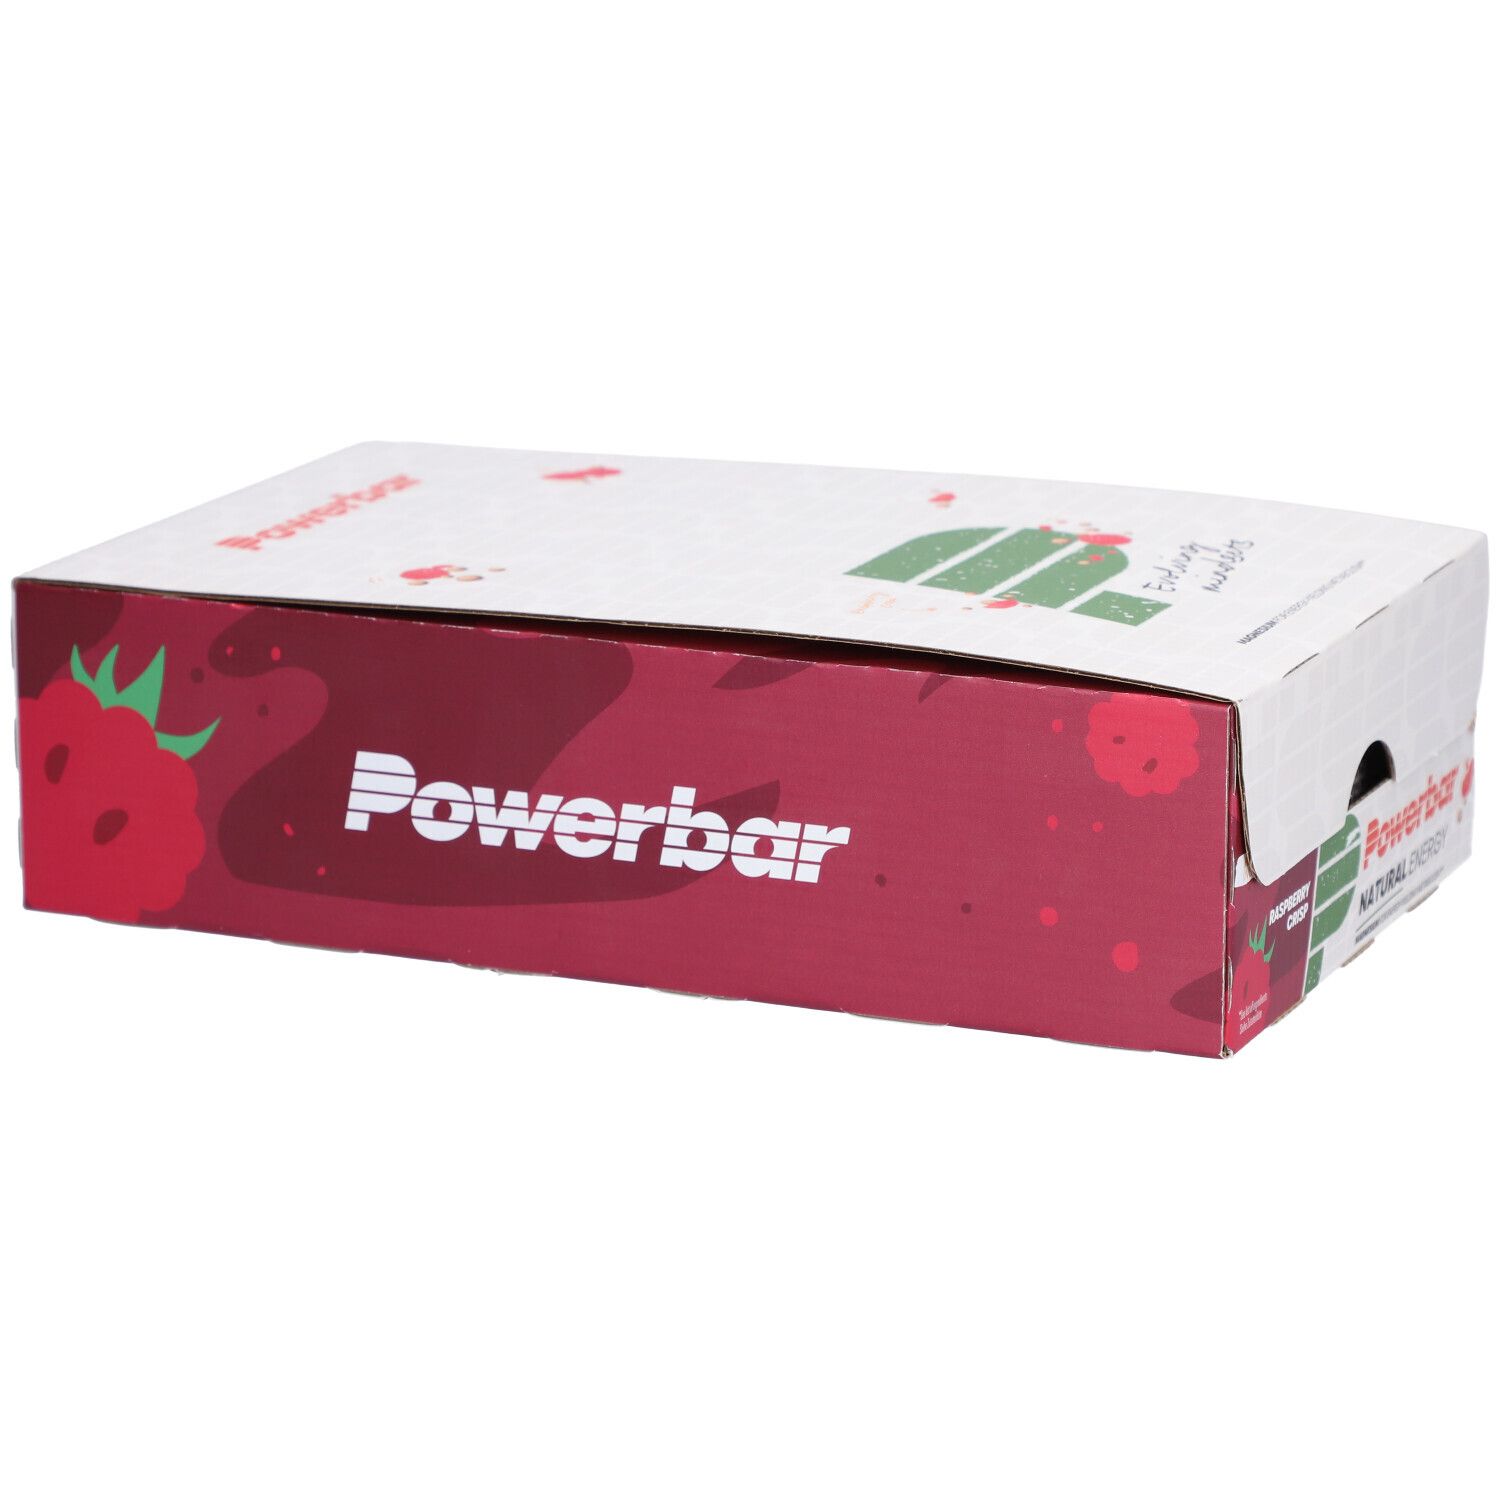 Powerbar® Natural Energy Bar Croustillante Framboise